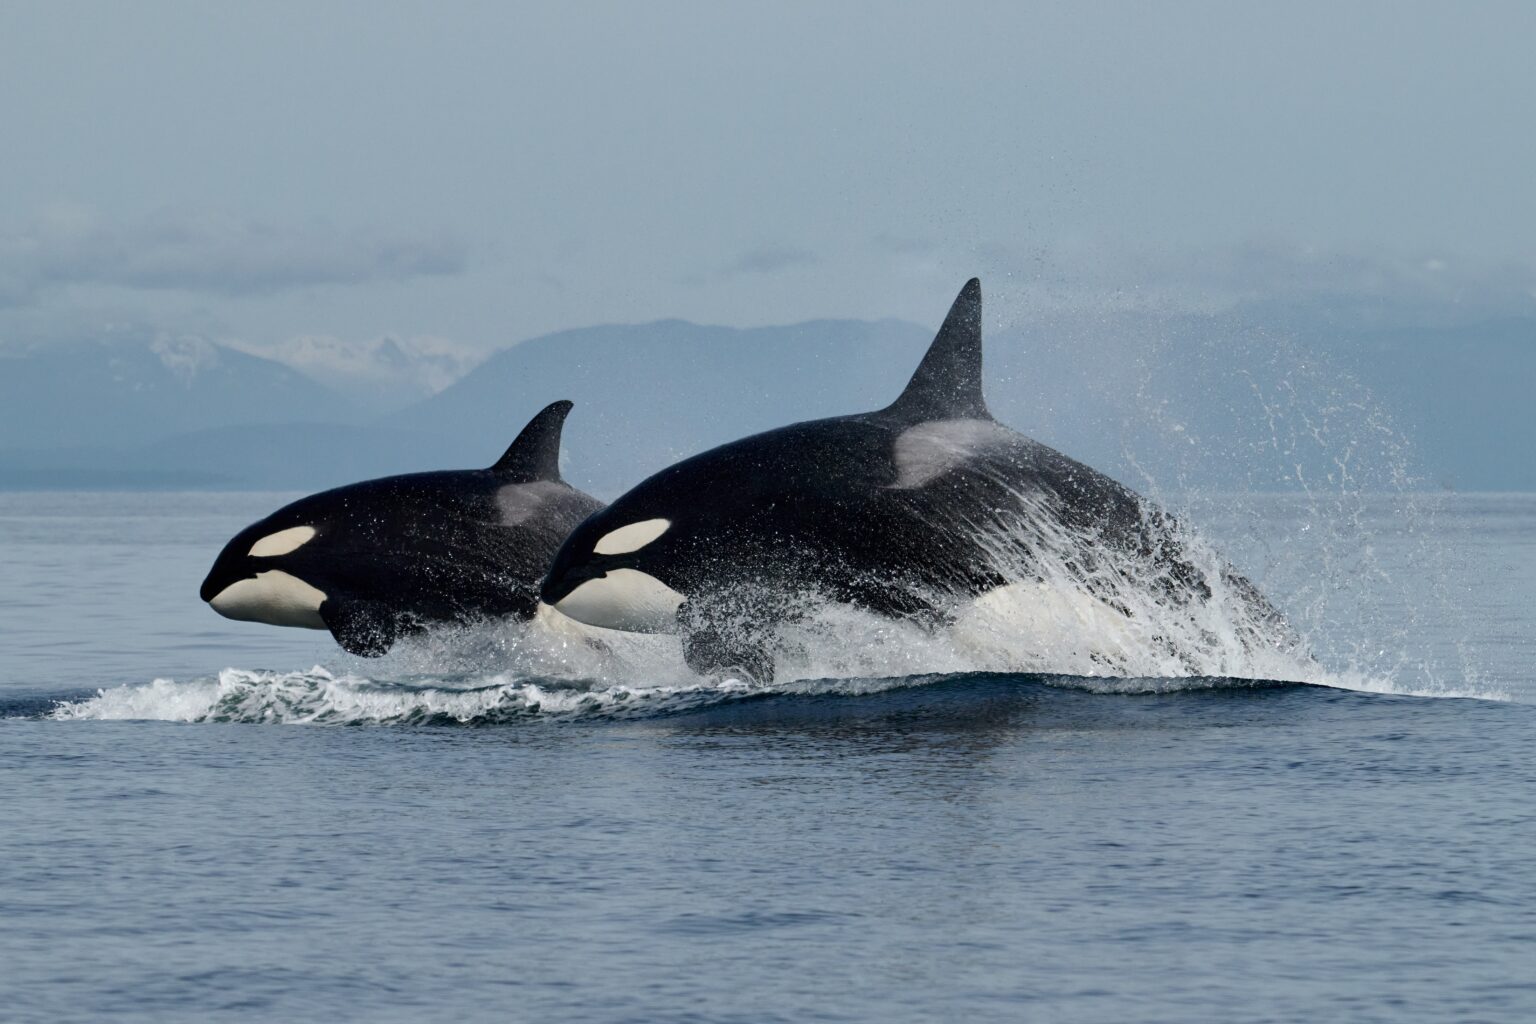 Comox Whale Watching Biggs Orca females breaching